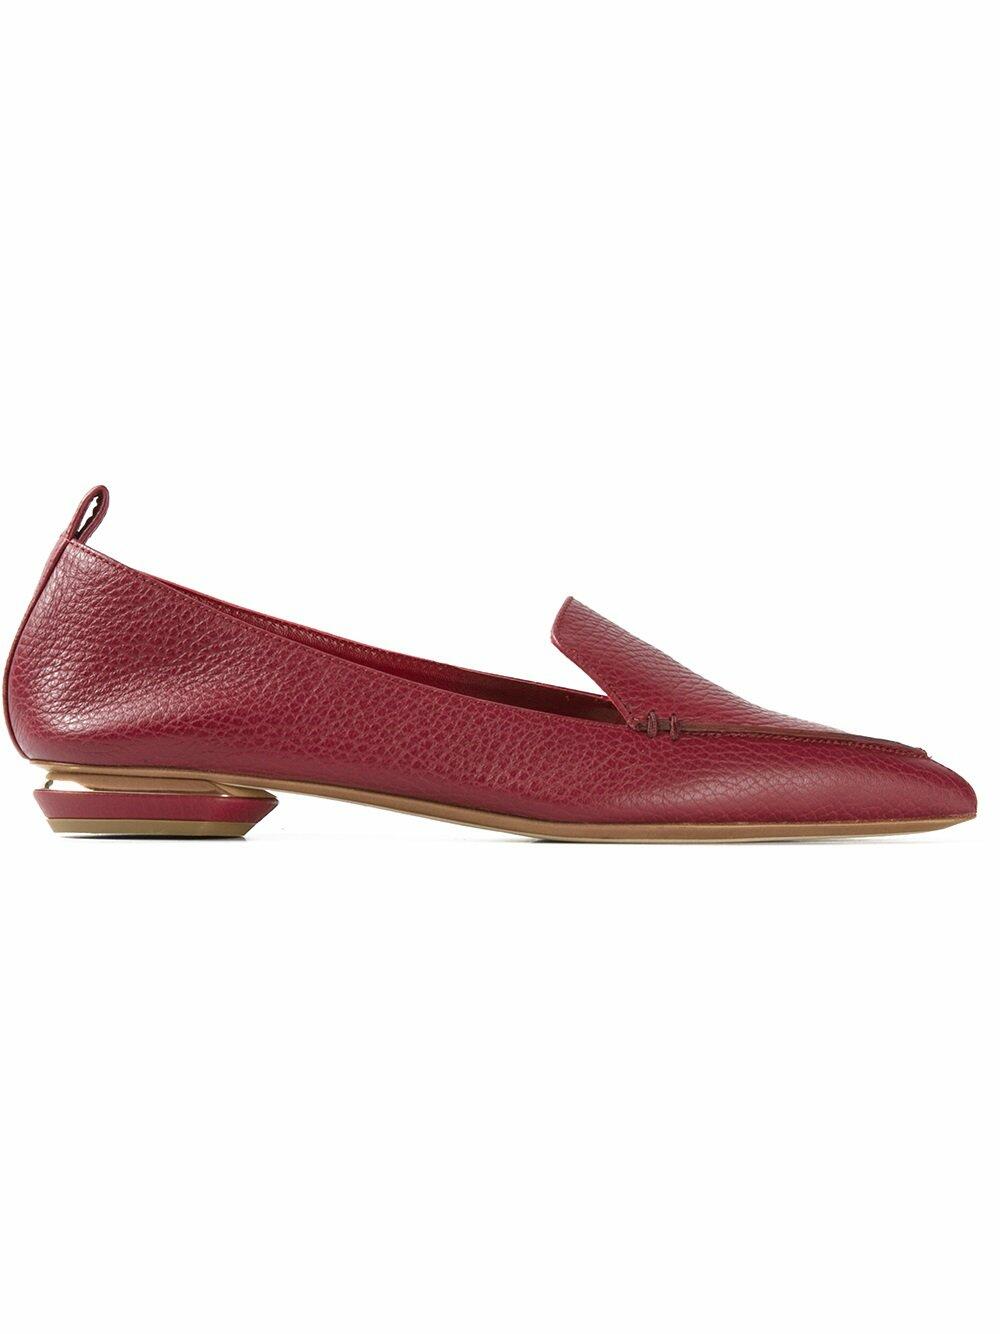 NICHOLAS KIRKWOOD Flats Pointed Toe Pink Leather Size 10